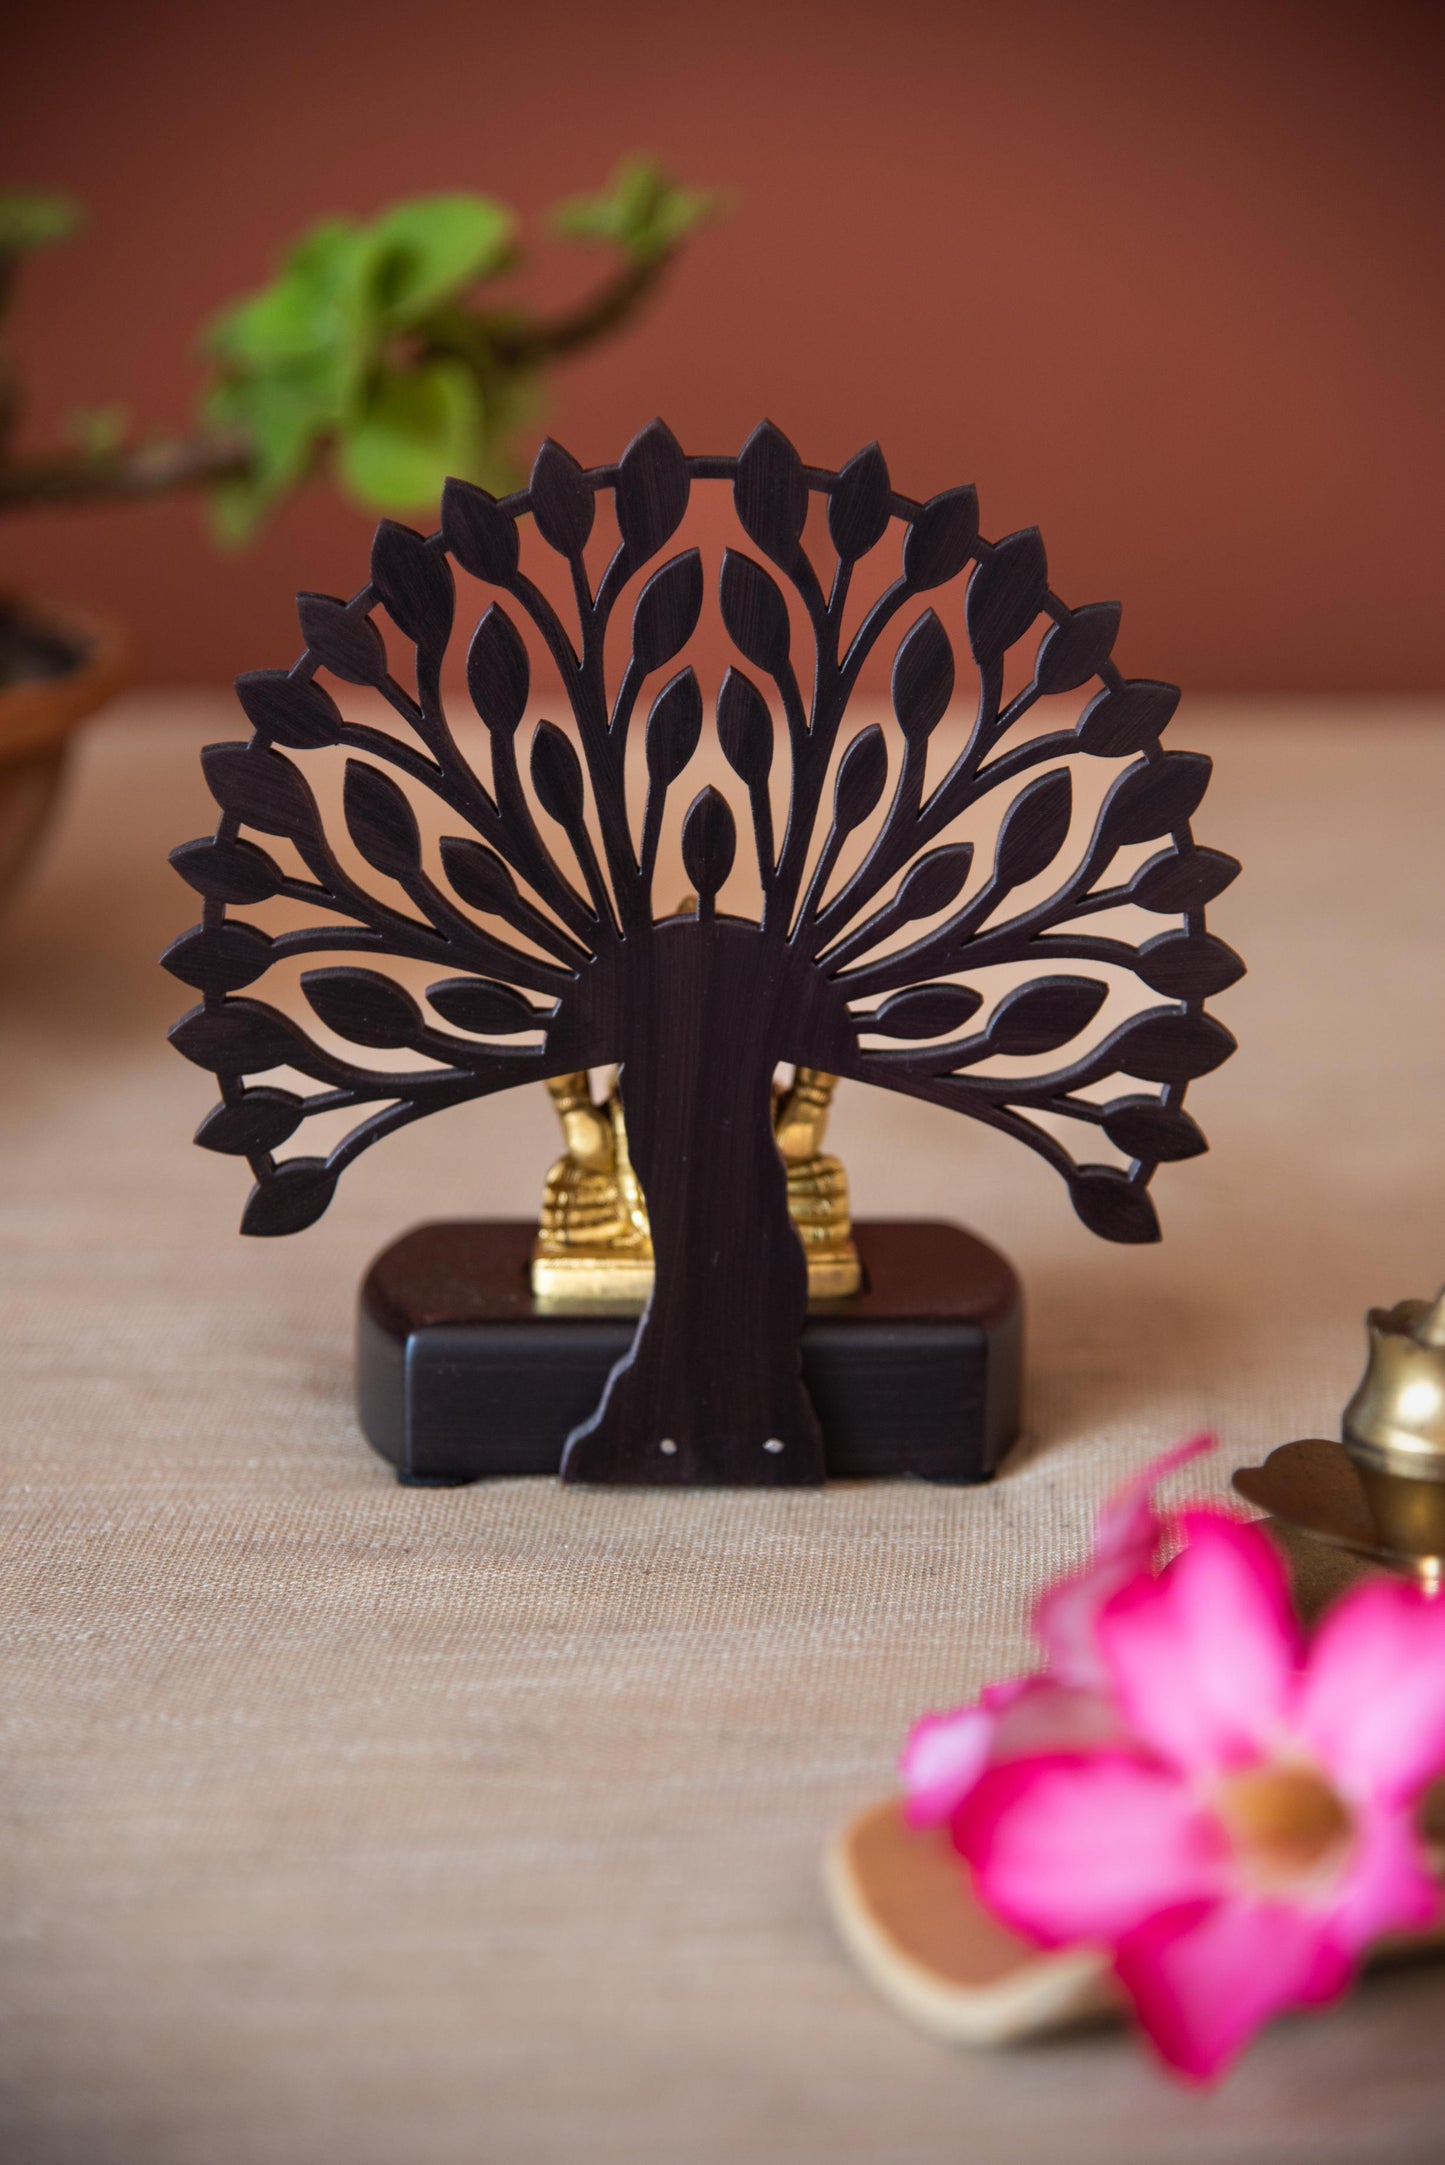 
                  
                    Brass Ganesh With Tree
                  
                